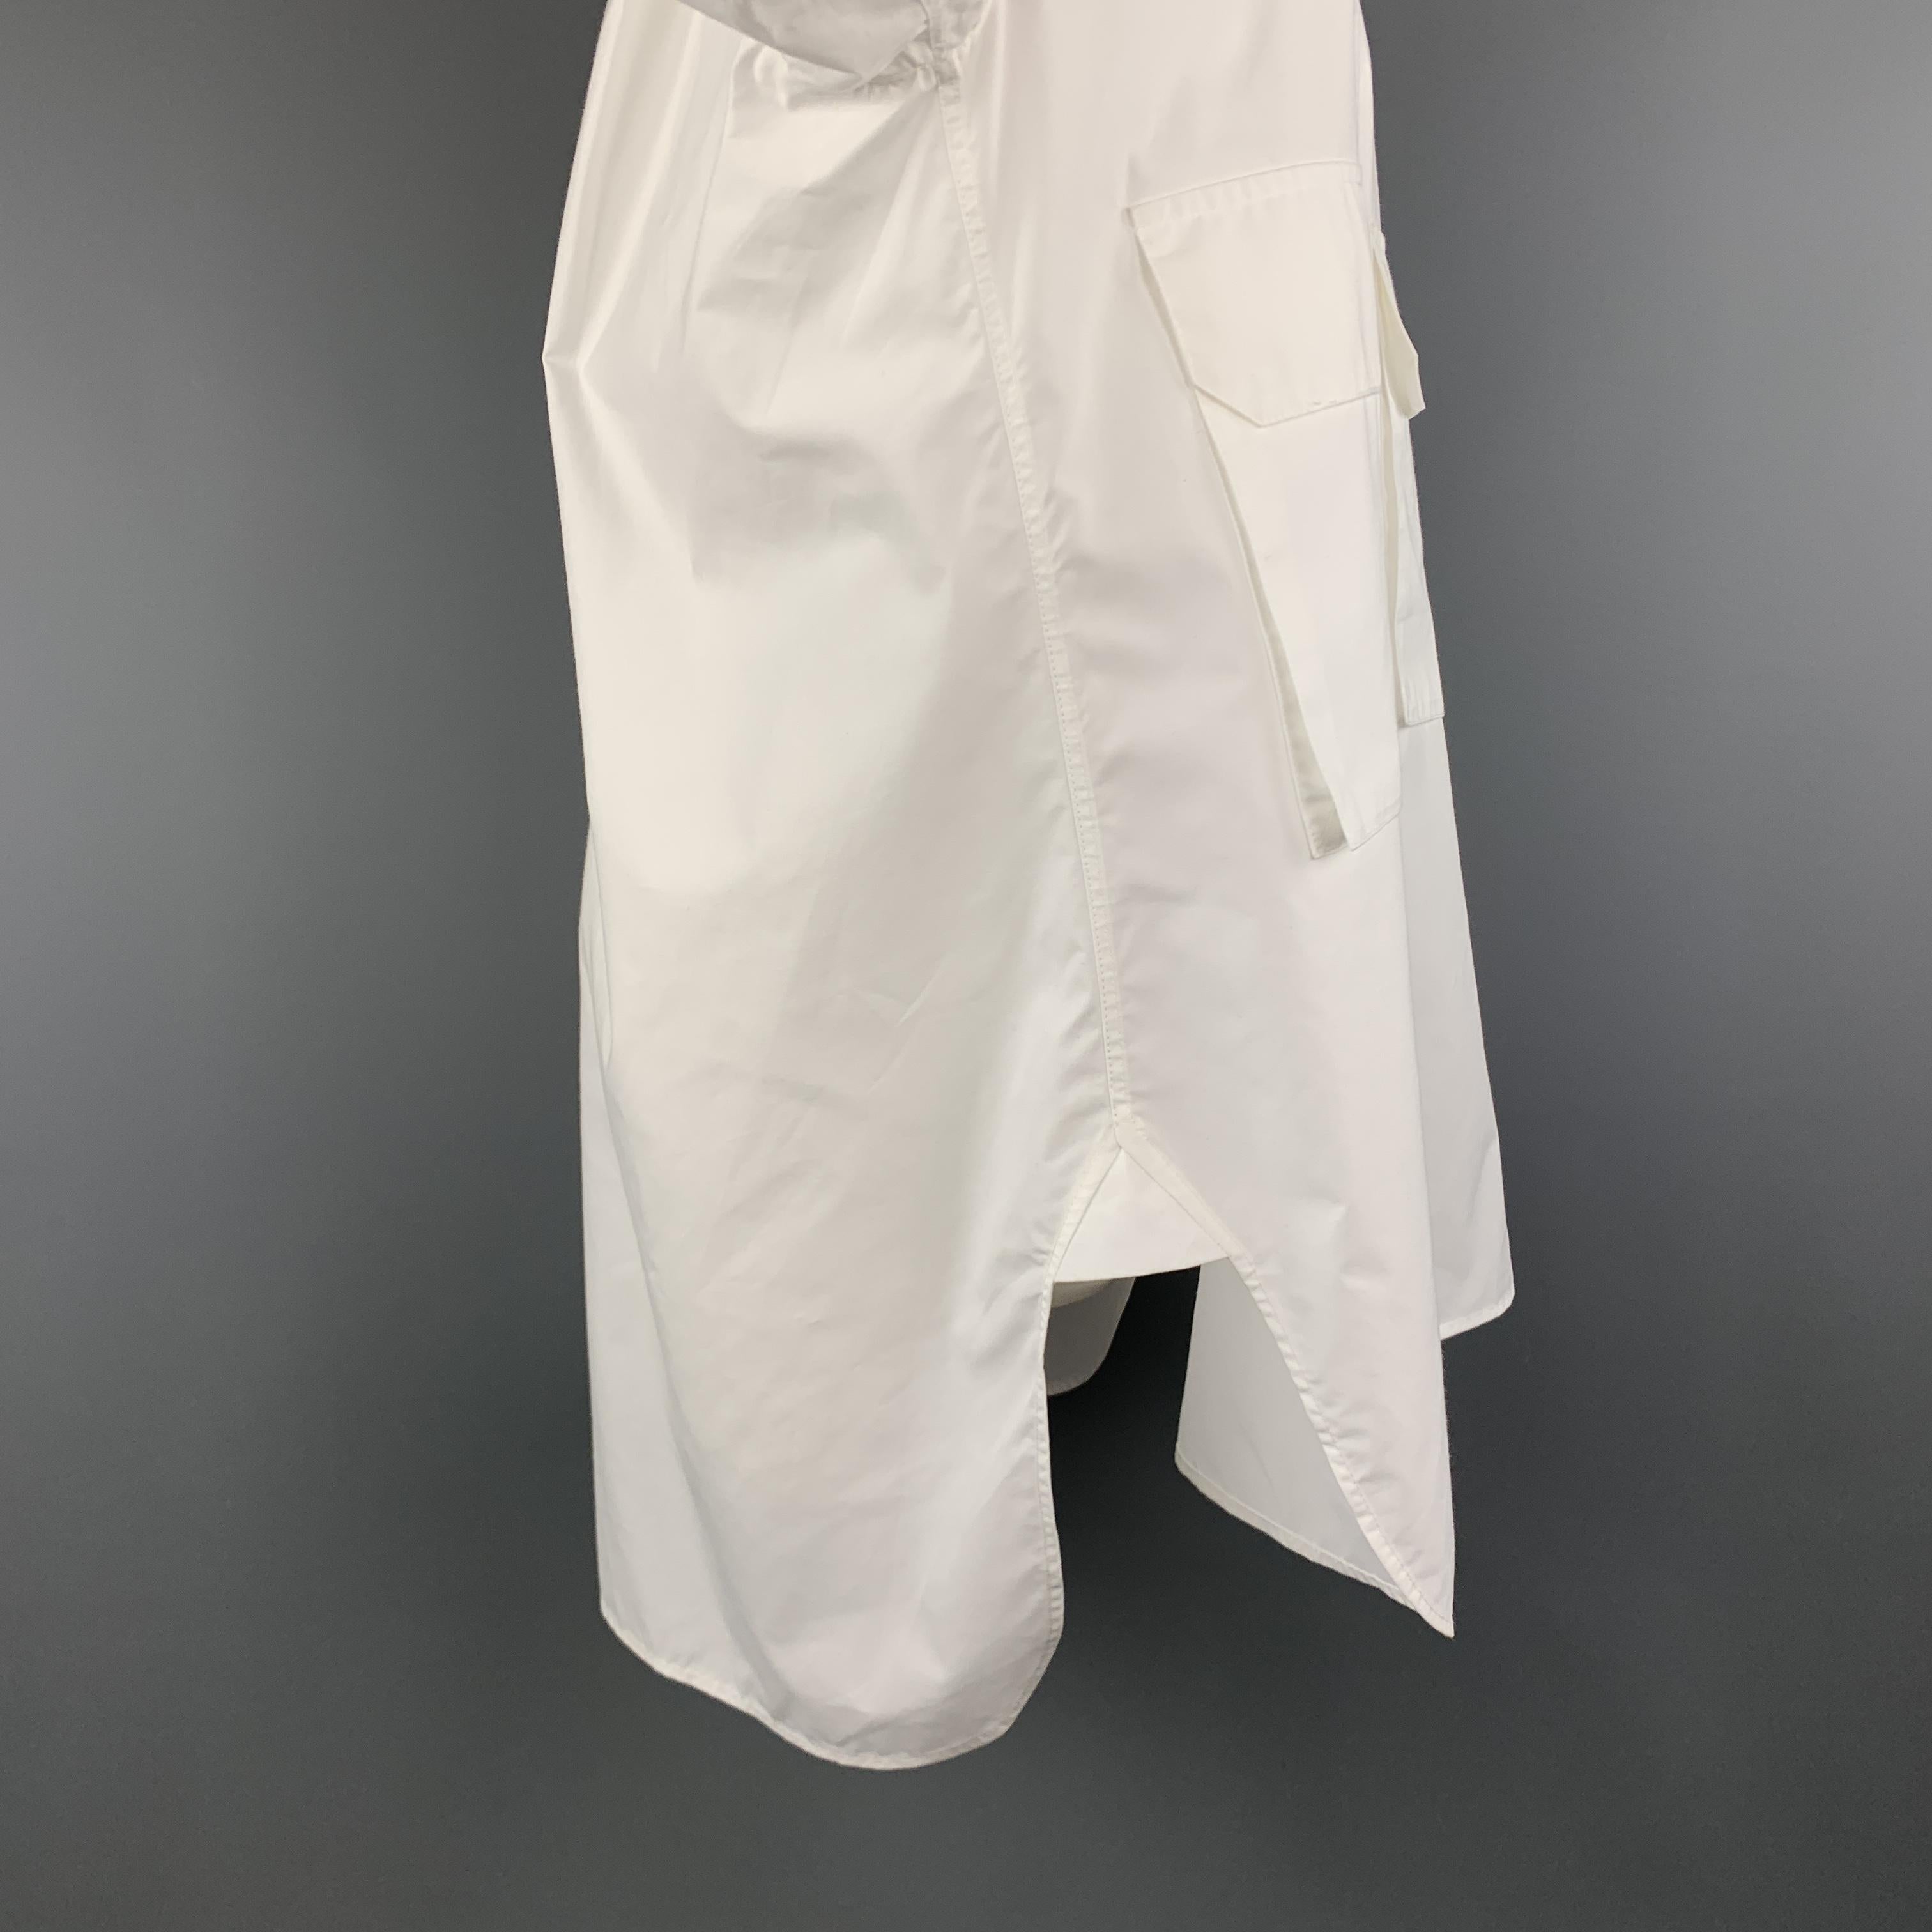 Women's DEVEAUX New York Size 8 White Cotton MAX SHIRT Oversized Blouse